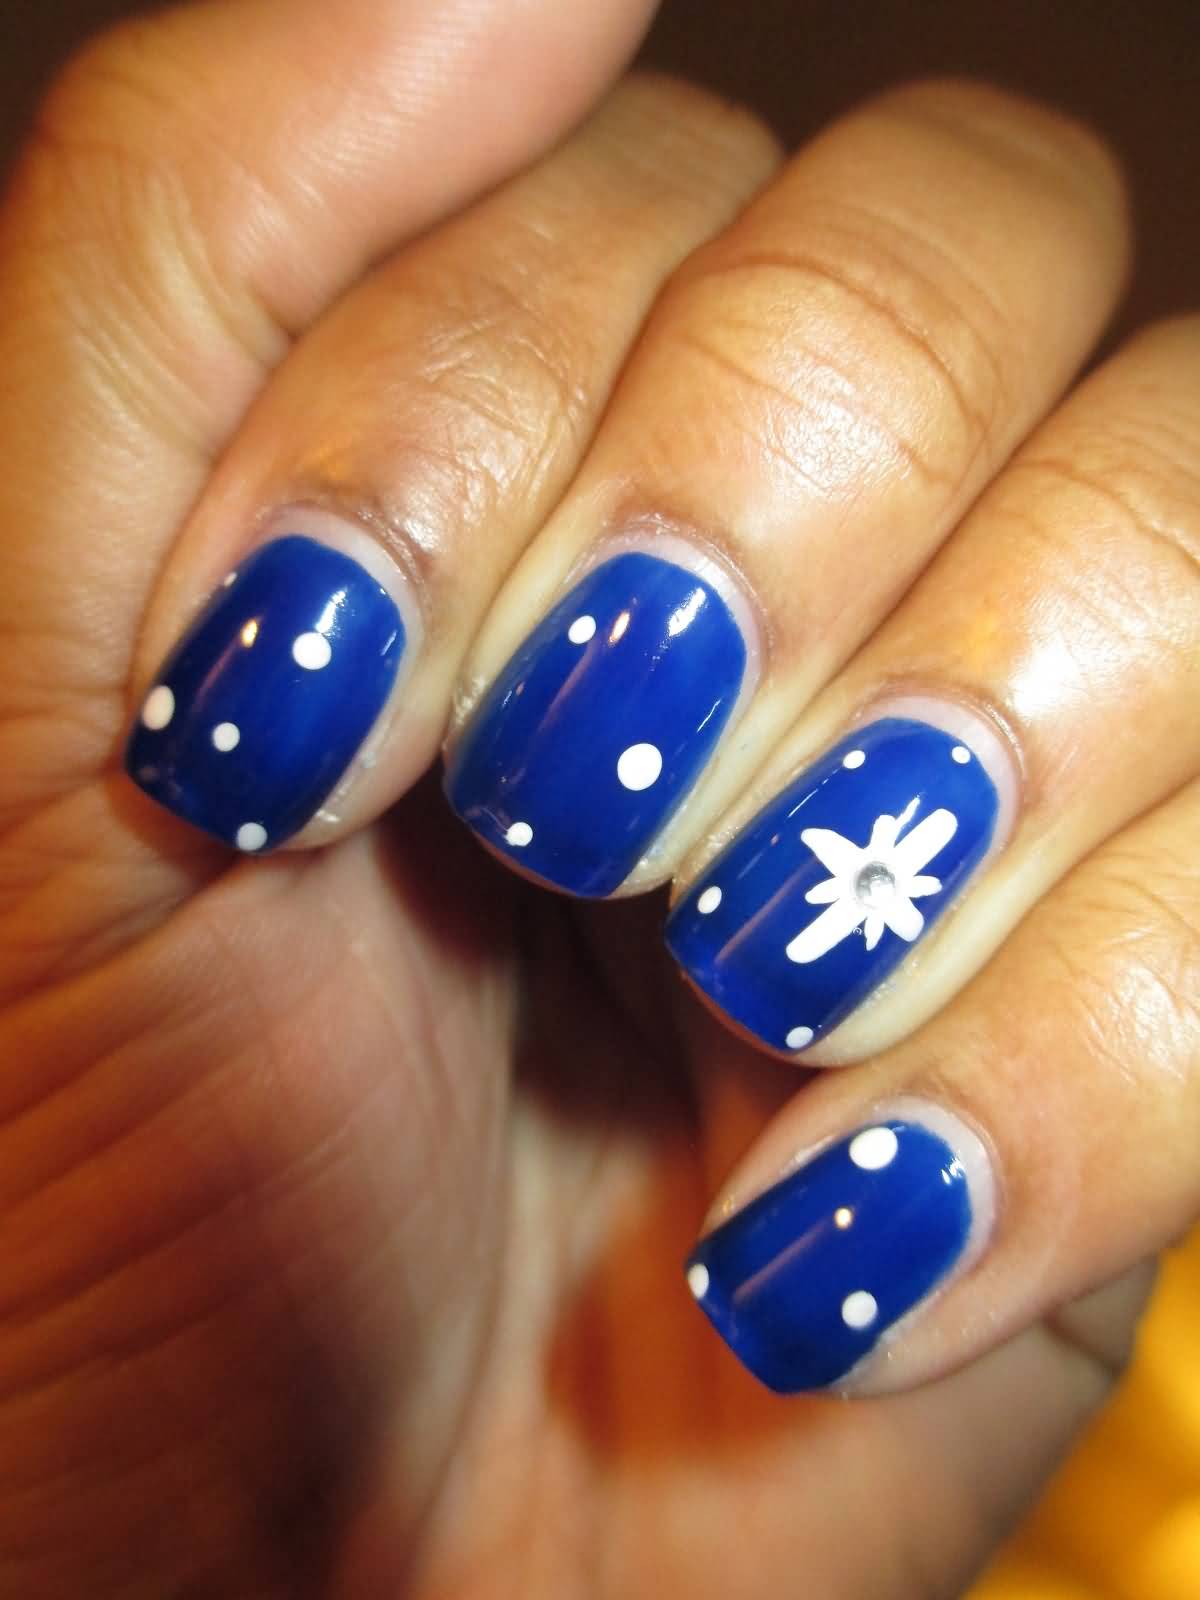 Royal Blue Nails With White Dots And Snowflakes Design Nail Art